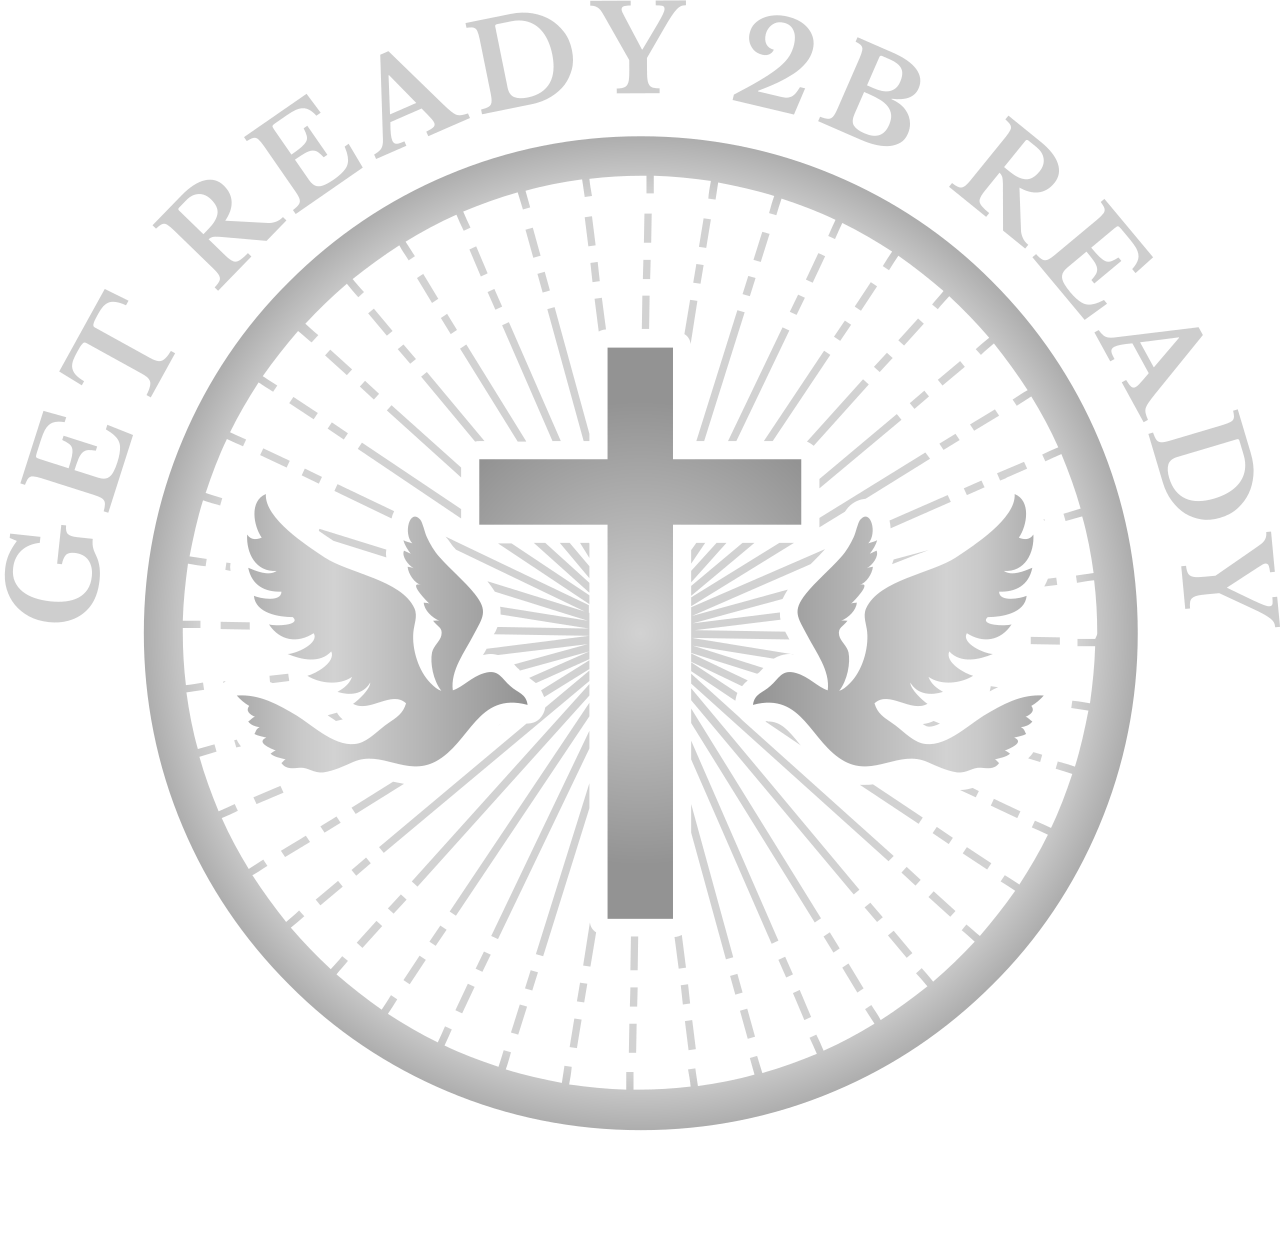 GET READY 2B READY's logo